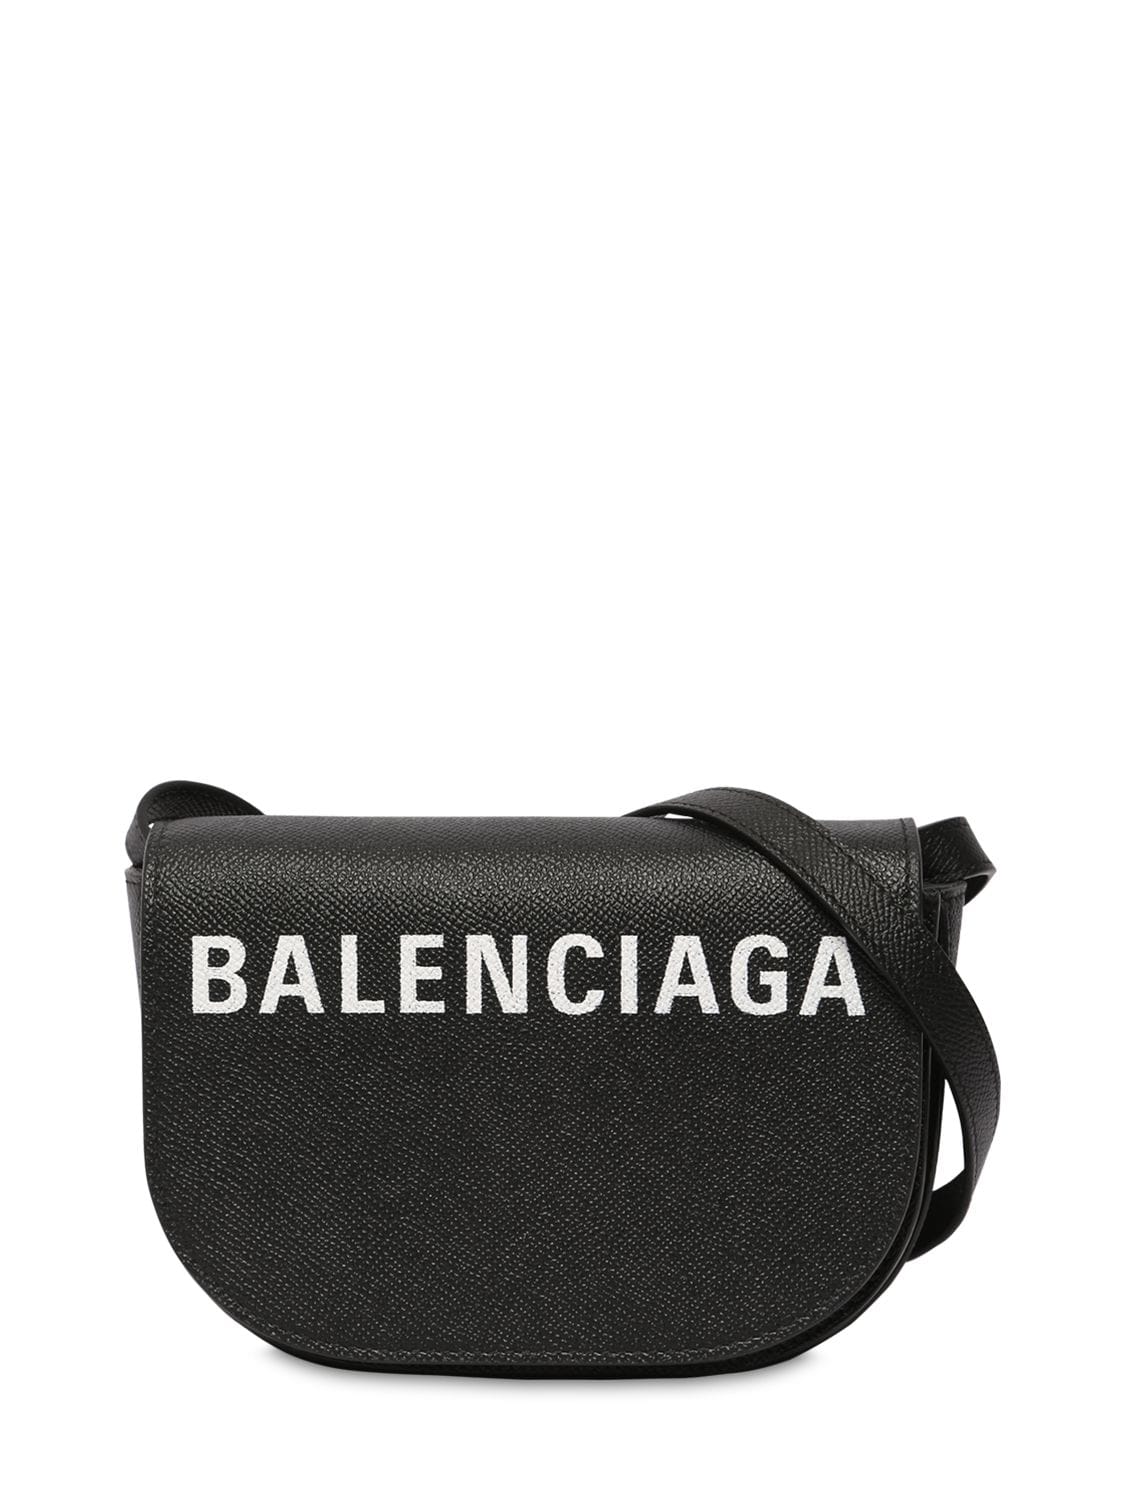 BALENCIAGA XS VILLE DAY LEATHER SHOULDER BAG,69IIUT003-MTAWMA2